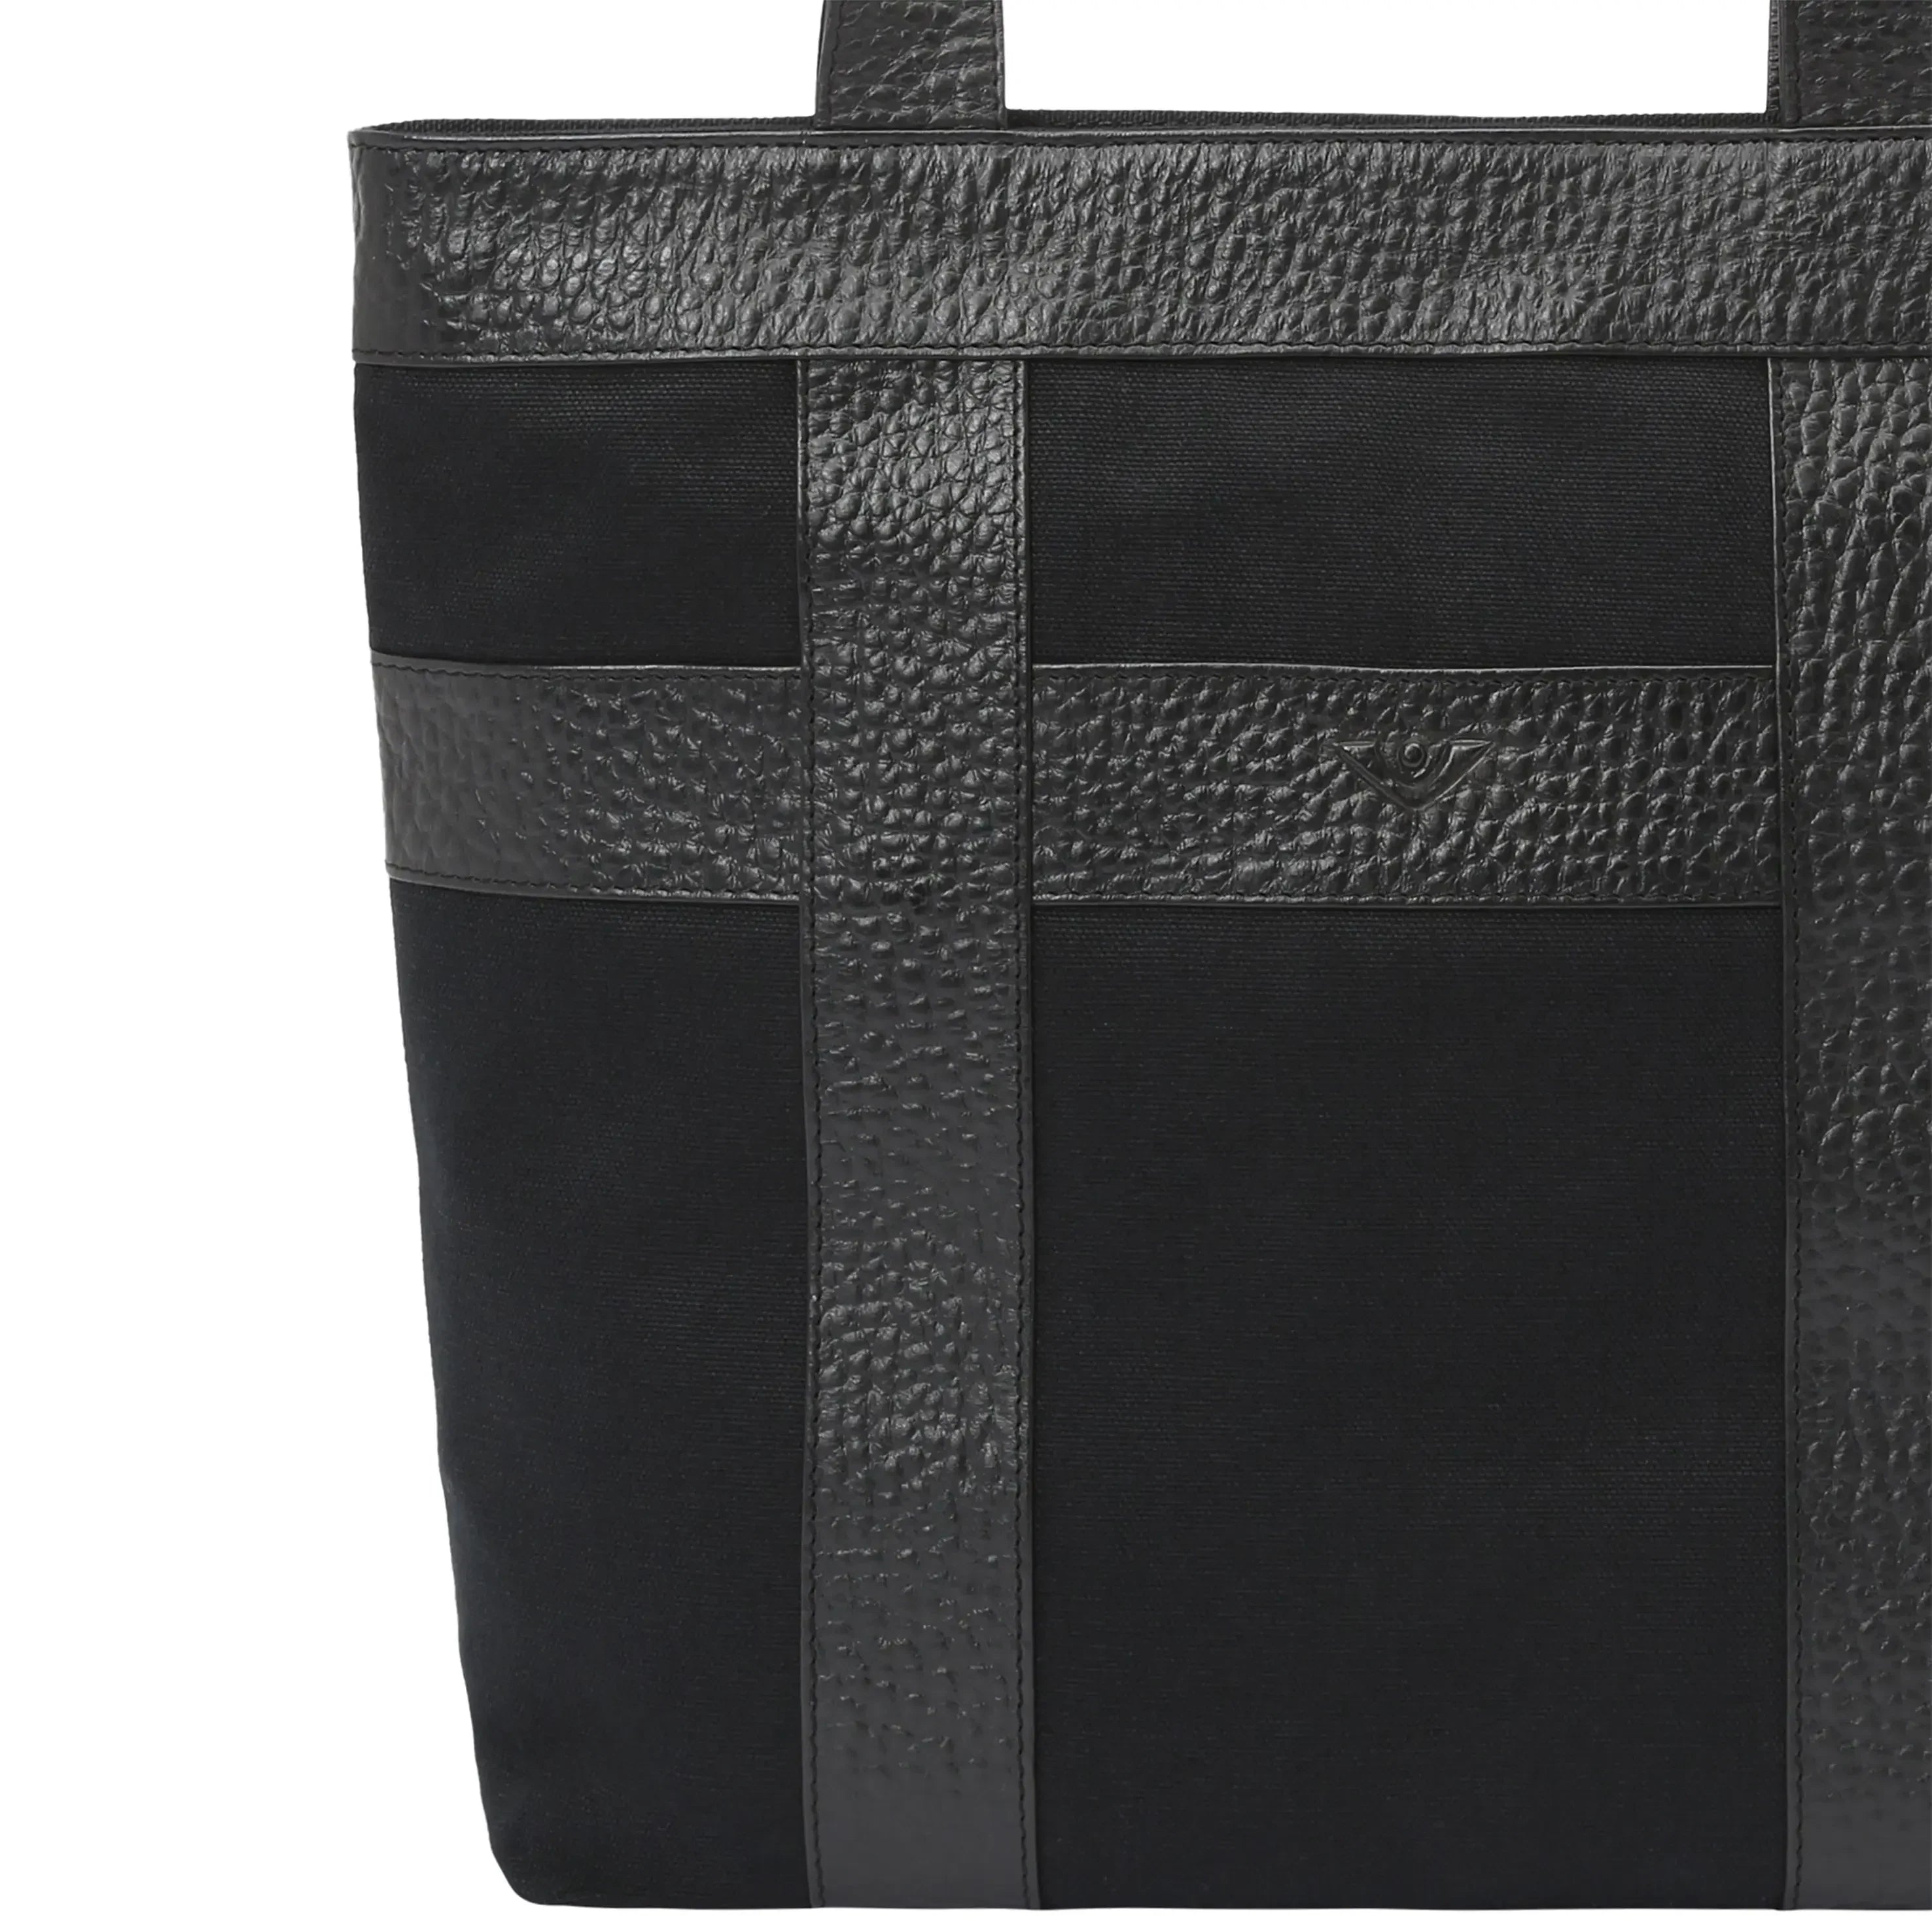 VOi-Design Sportivo Elina shoulder bag 30 cm - Black/Platinum